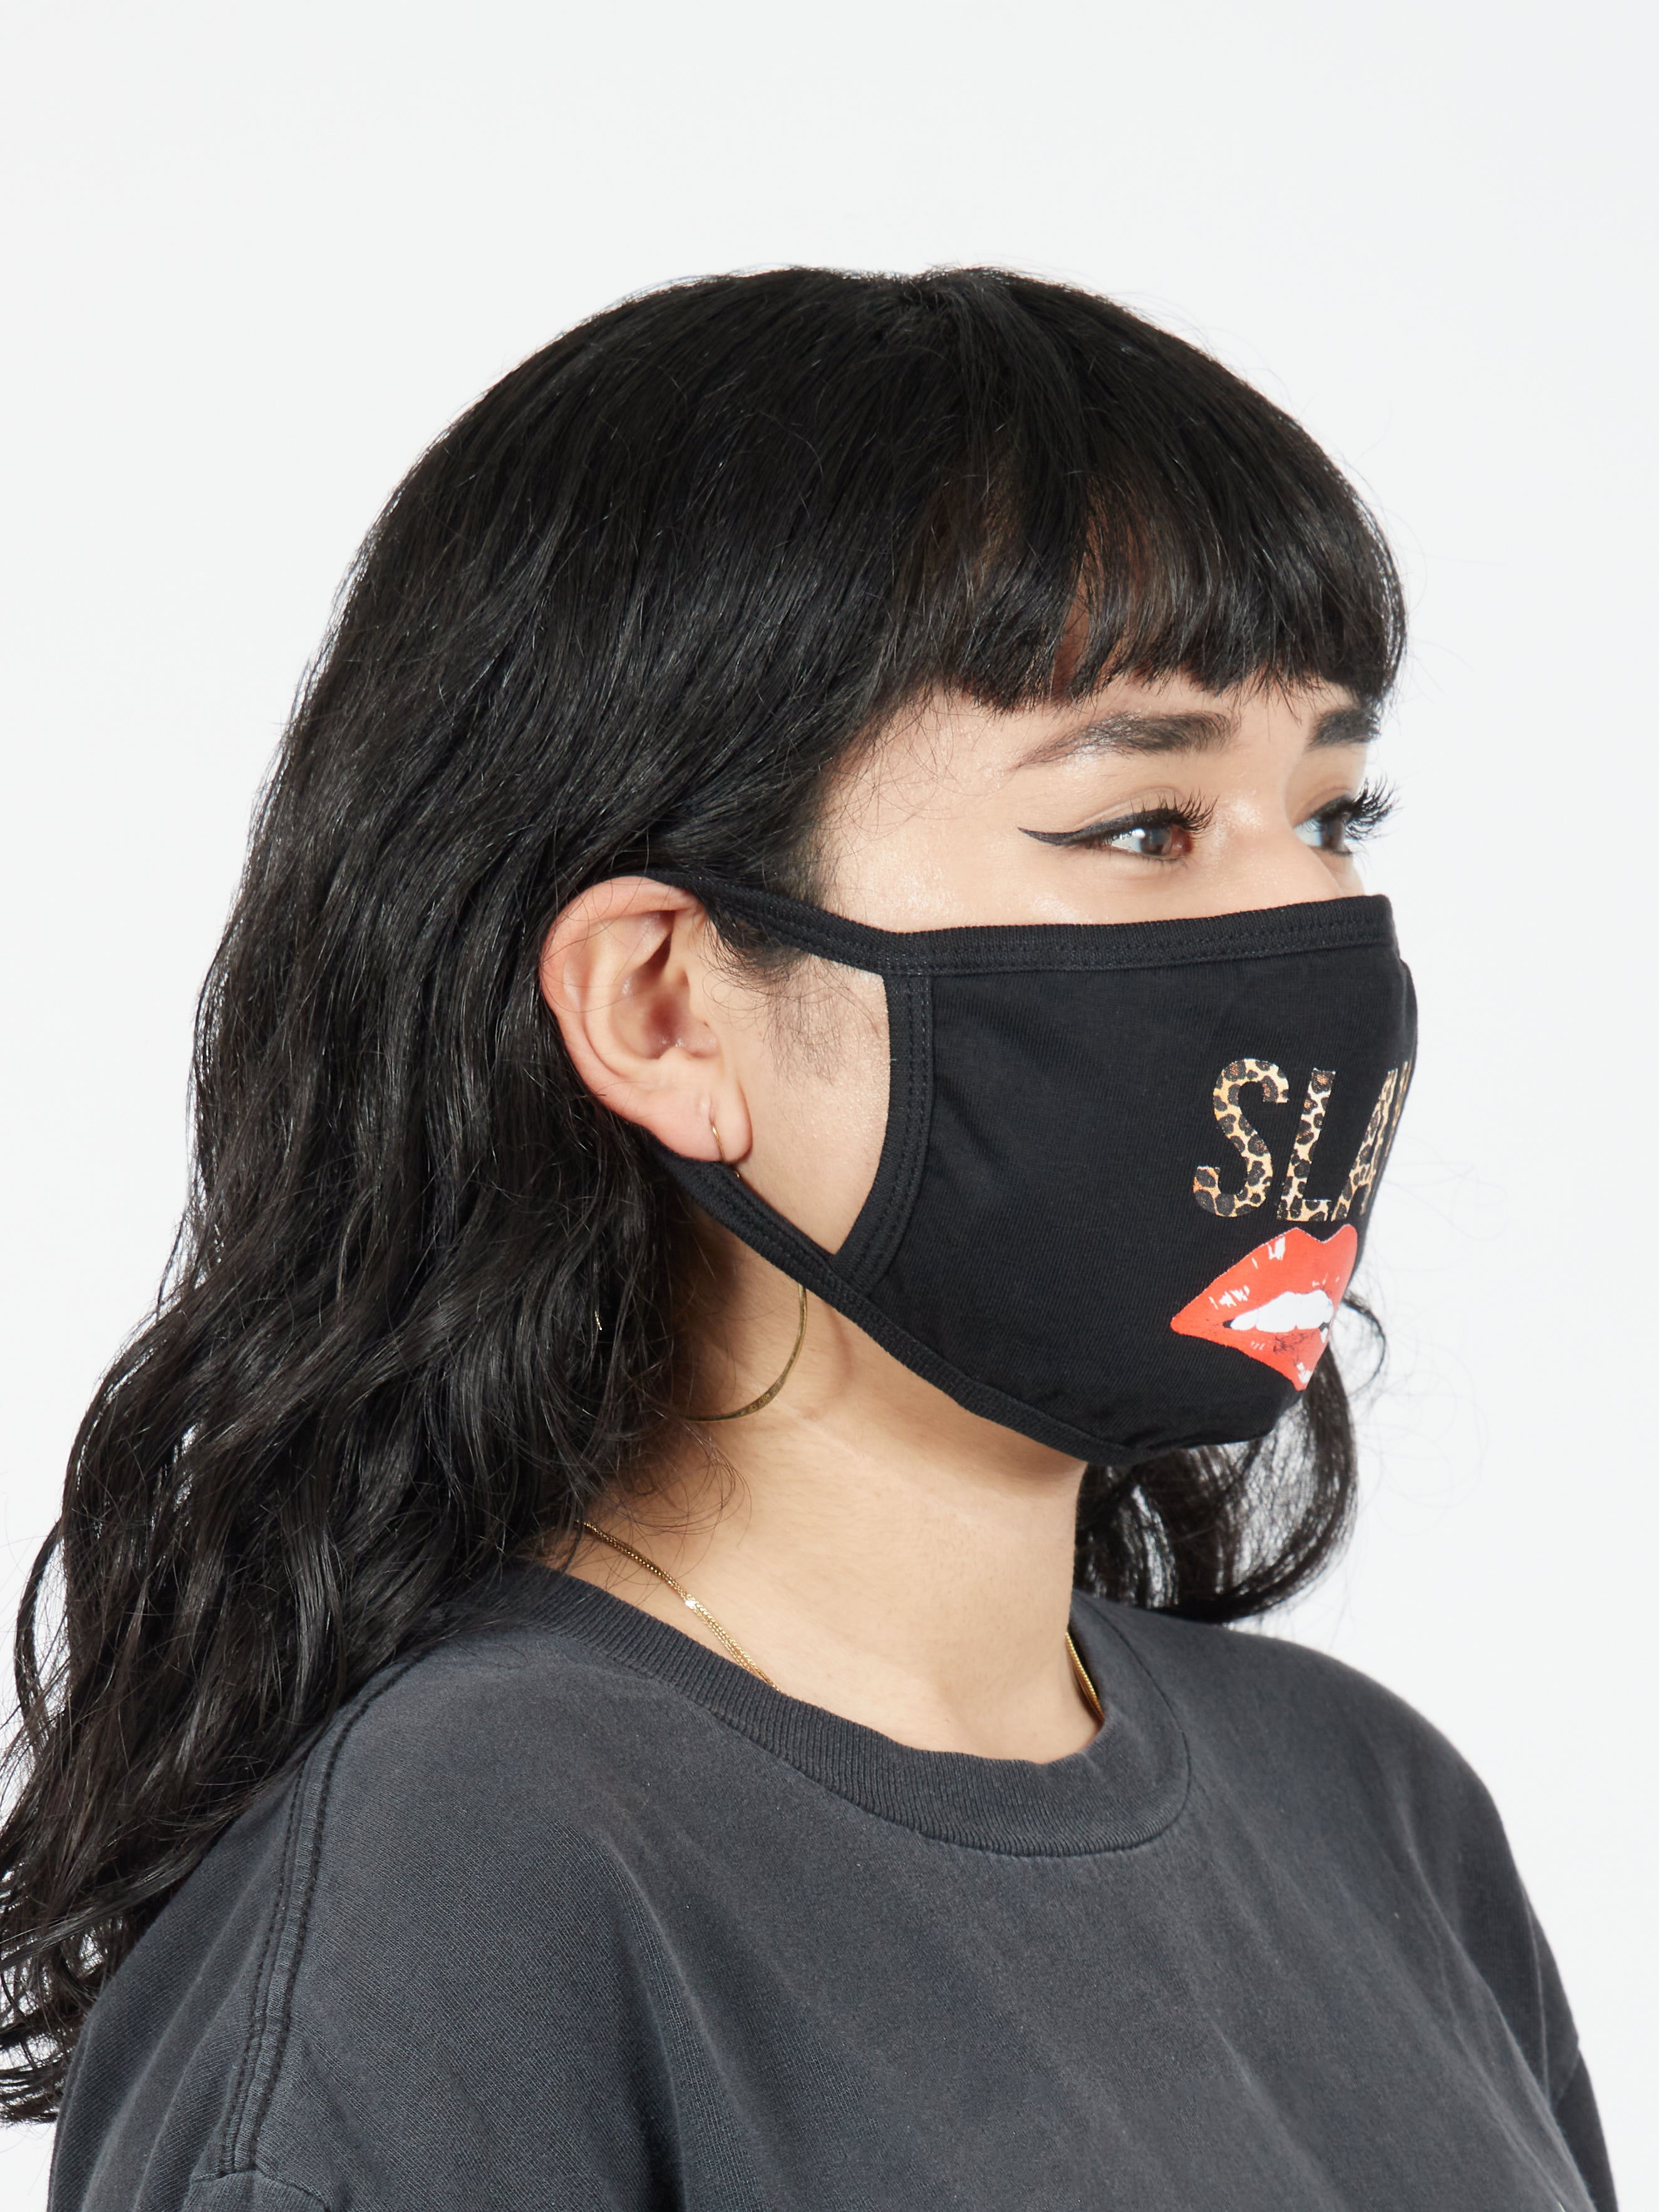 Slay Printed Fabric Face Mask